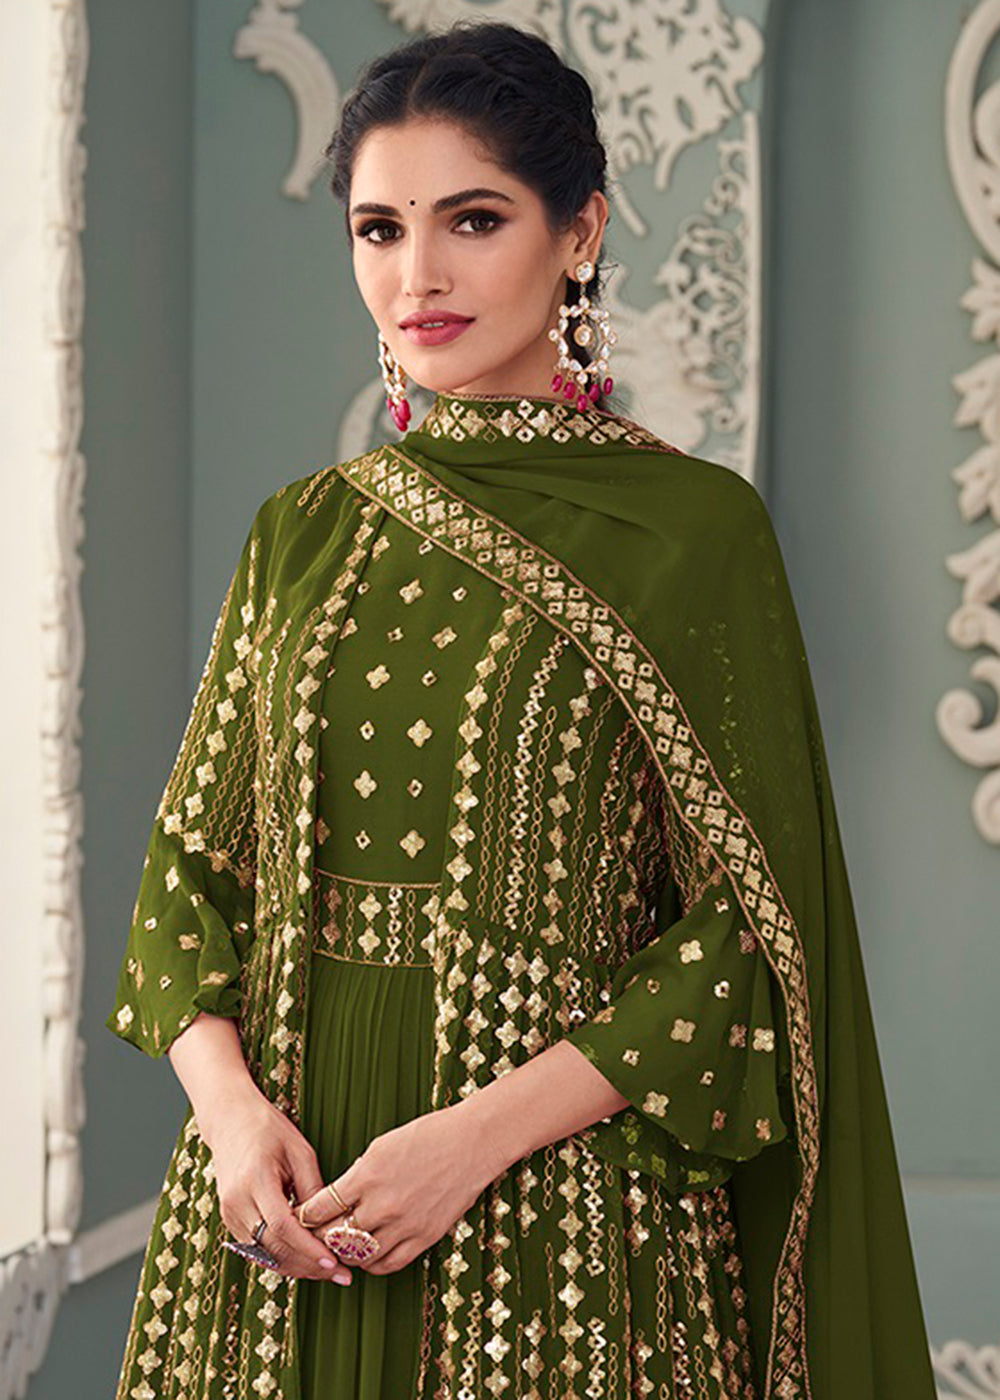 Buy Jacket Style Lovely Green Embroidered Anarkali - Wedding Anarkali